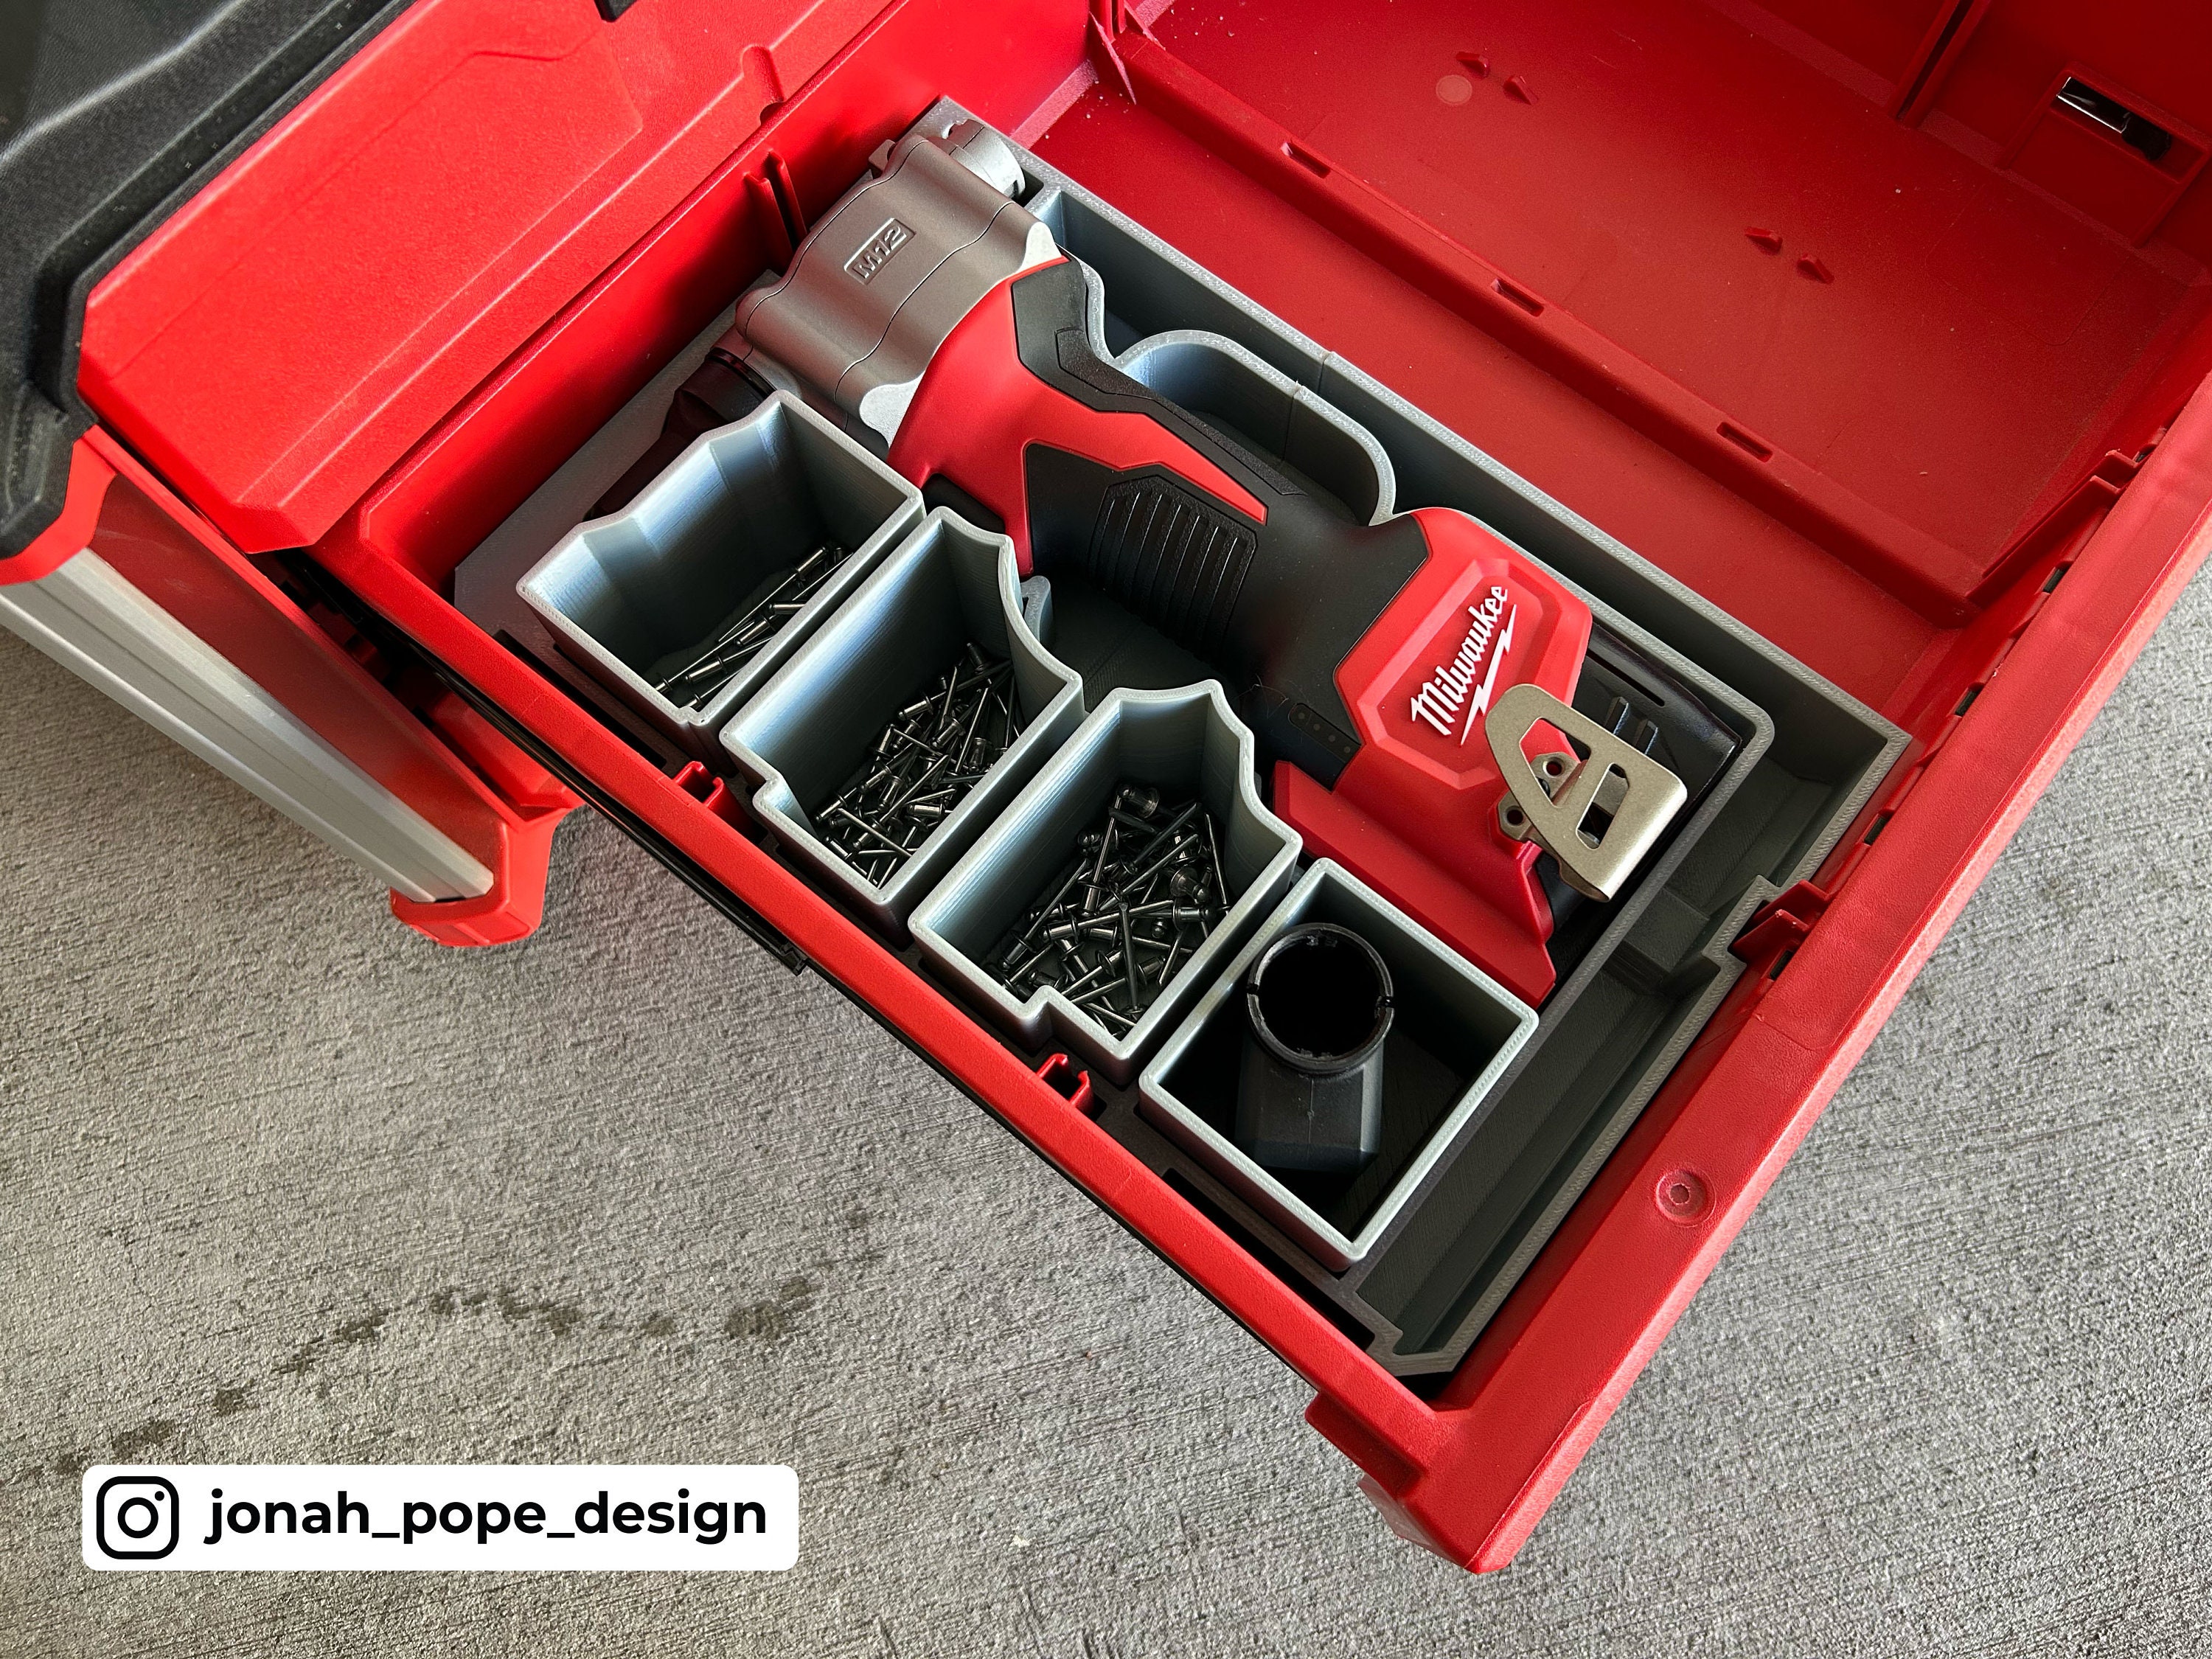 Jonah Pope M12 Dremel Insert-milwaukee Packout Compact Organizer, Service  Van Organizer, Efficient Dremel Storage, Custom Packout Insert 